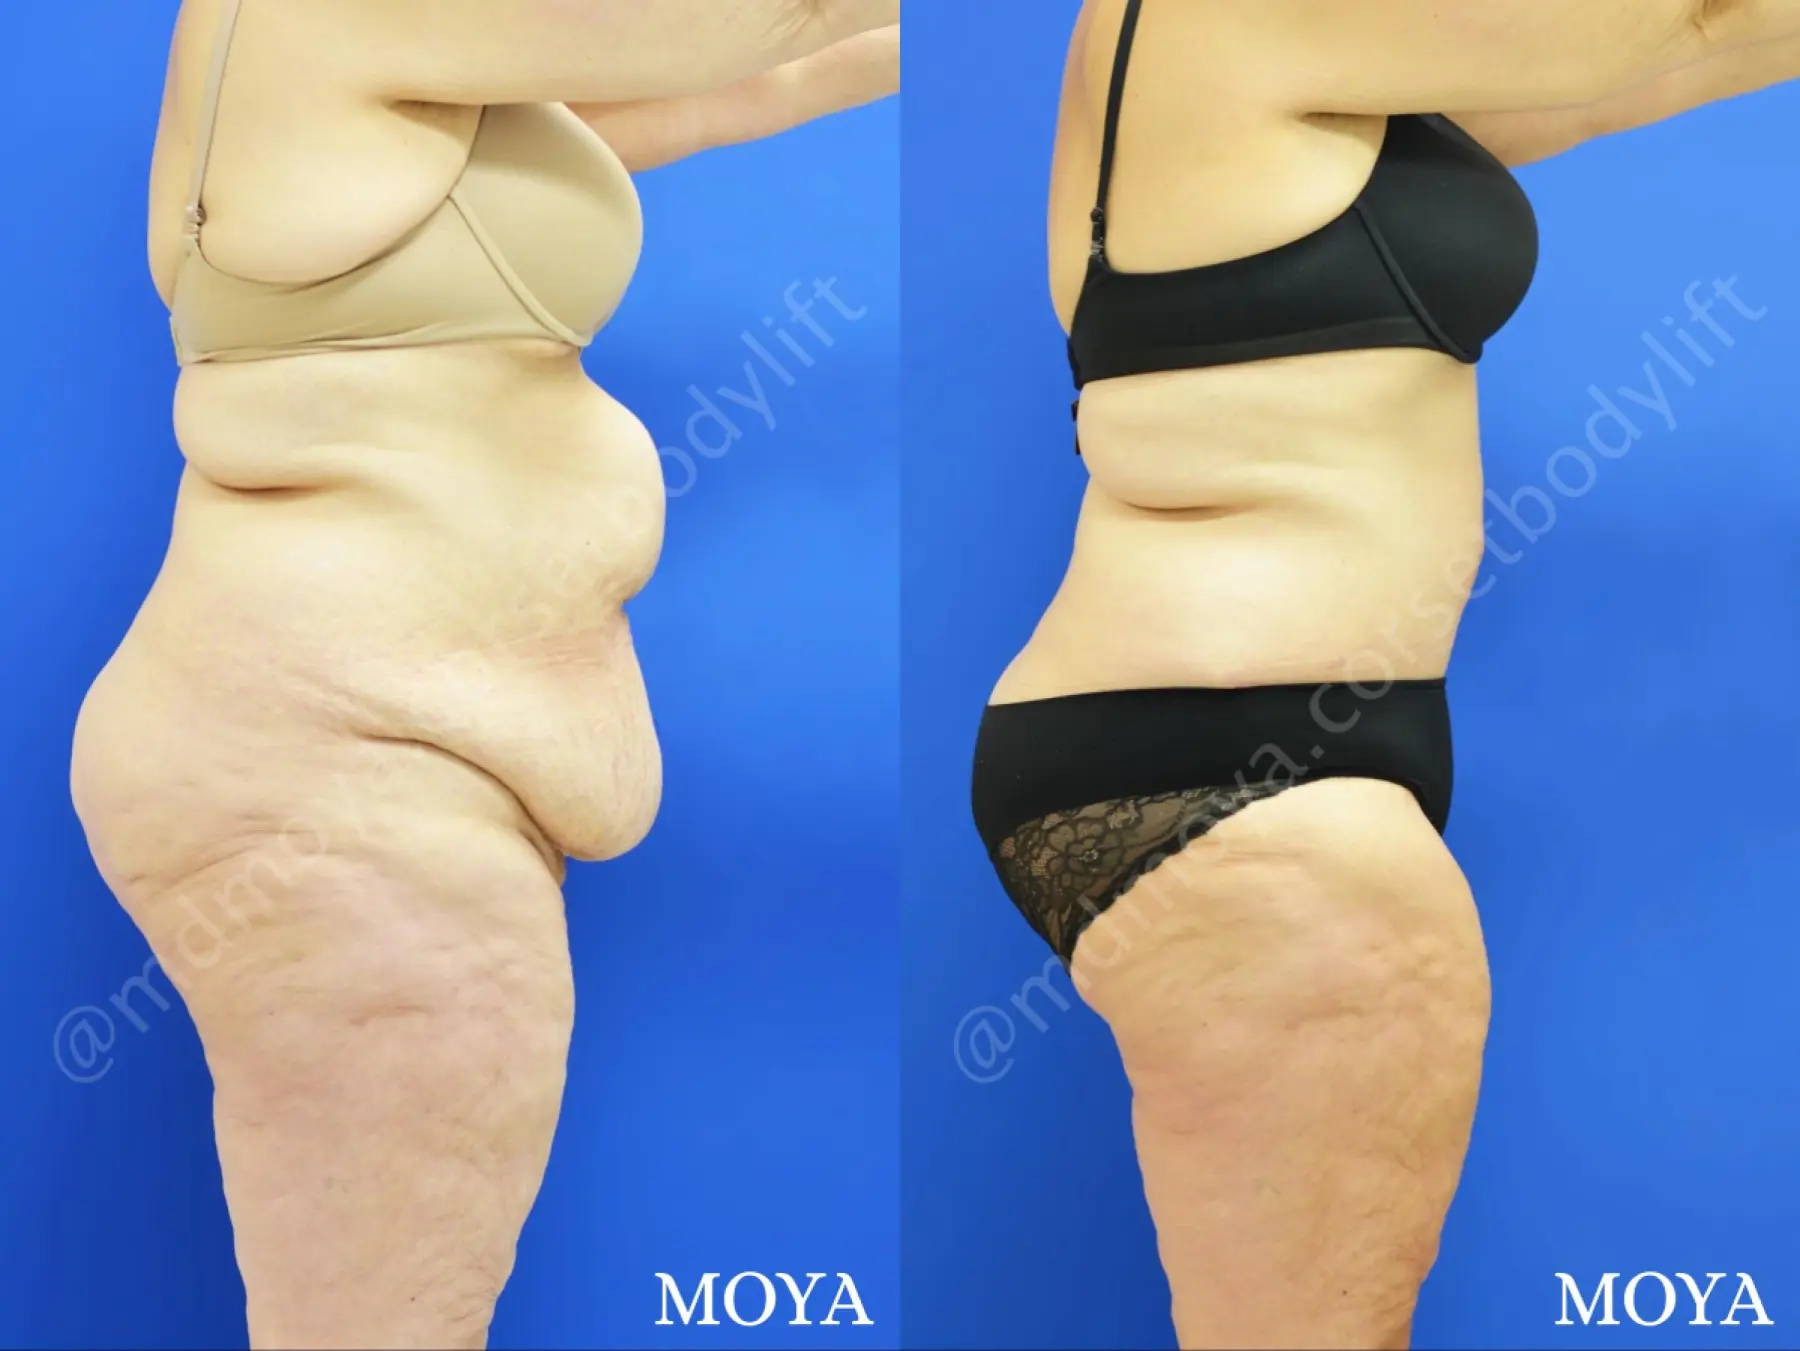 Fleur-de-lis Tummy Tuck (ltd):  BMI 34 - Before and After 2